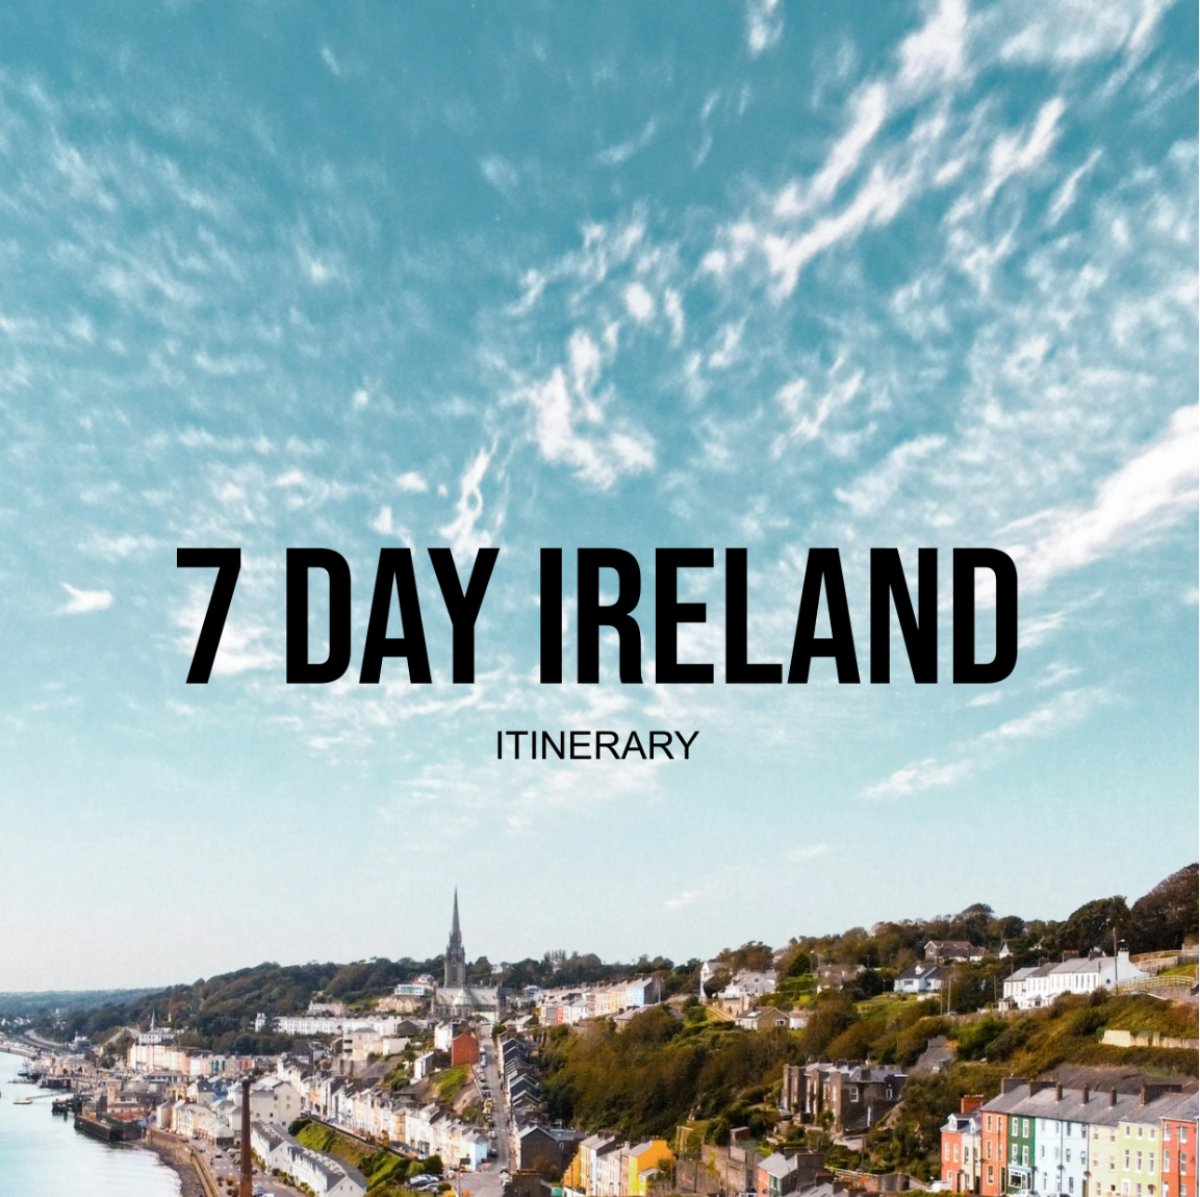 7 Day Ireland Itinerary Template